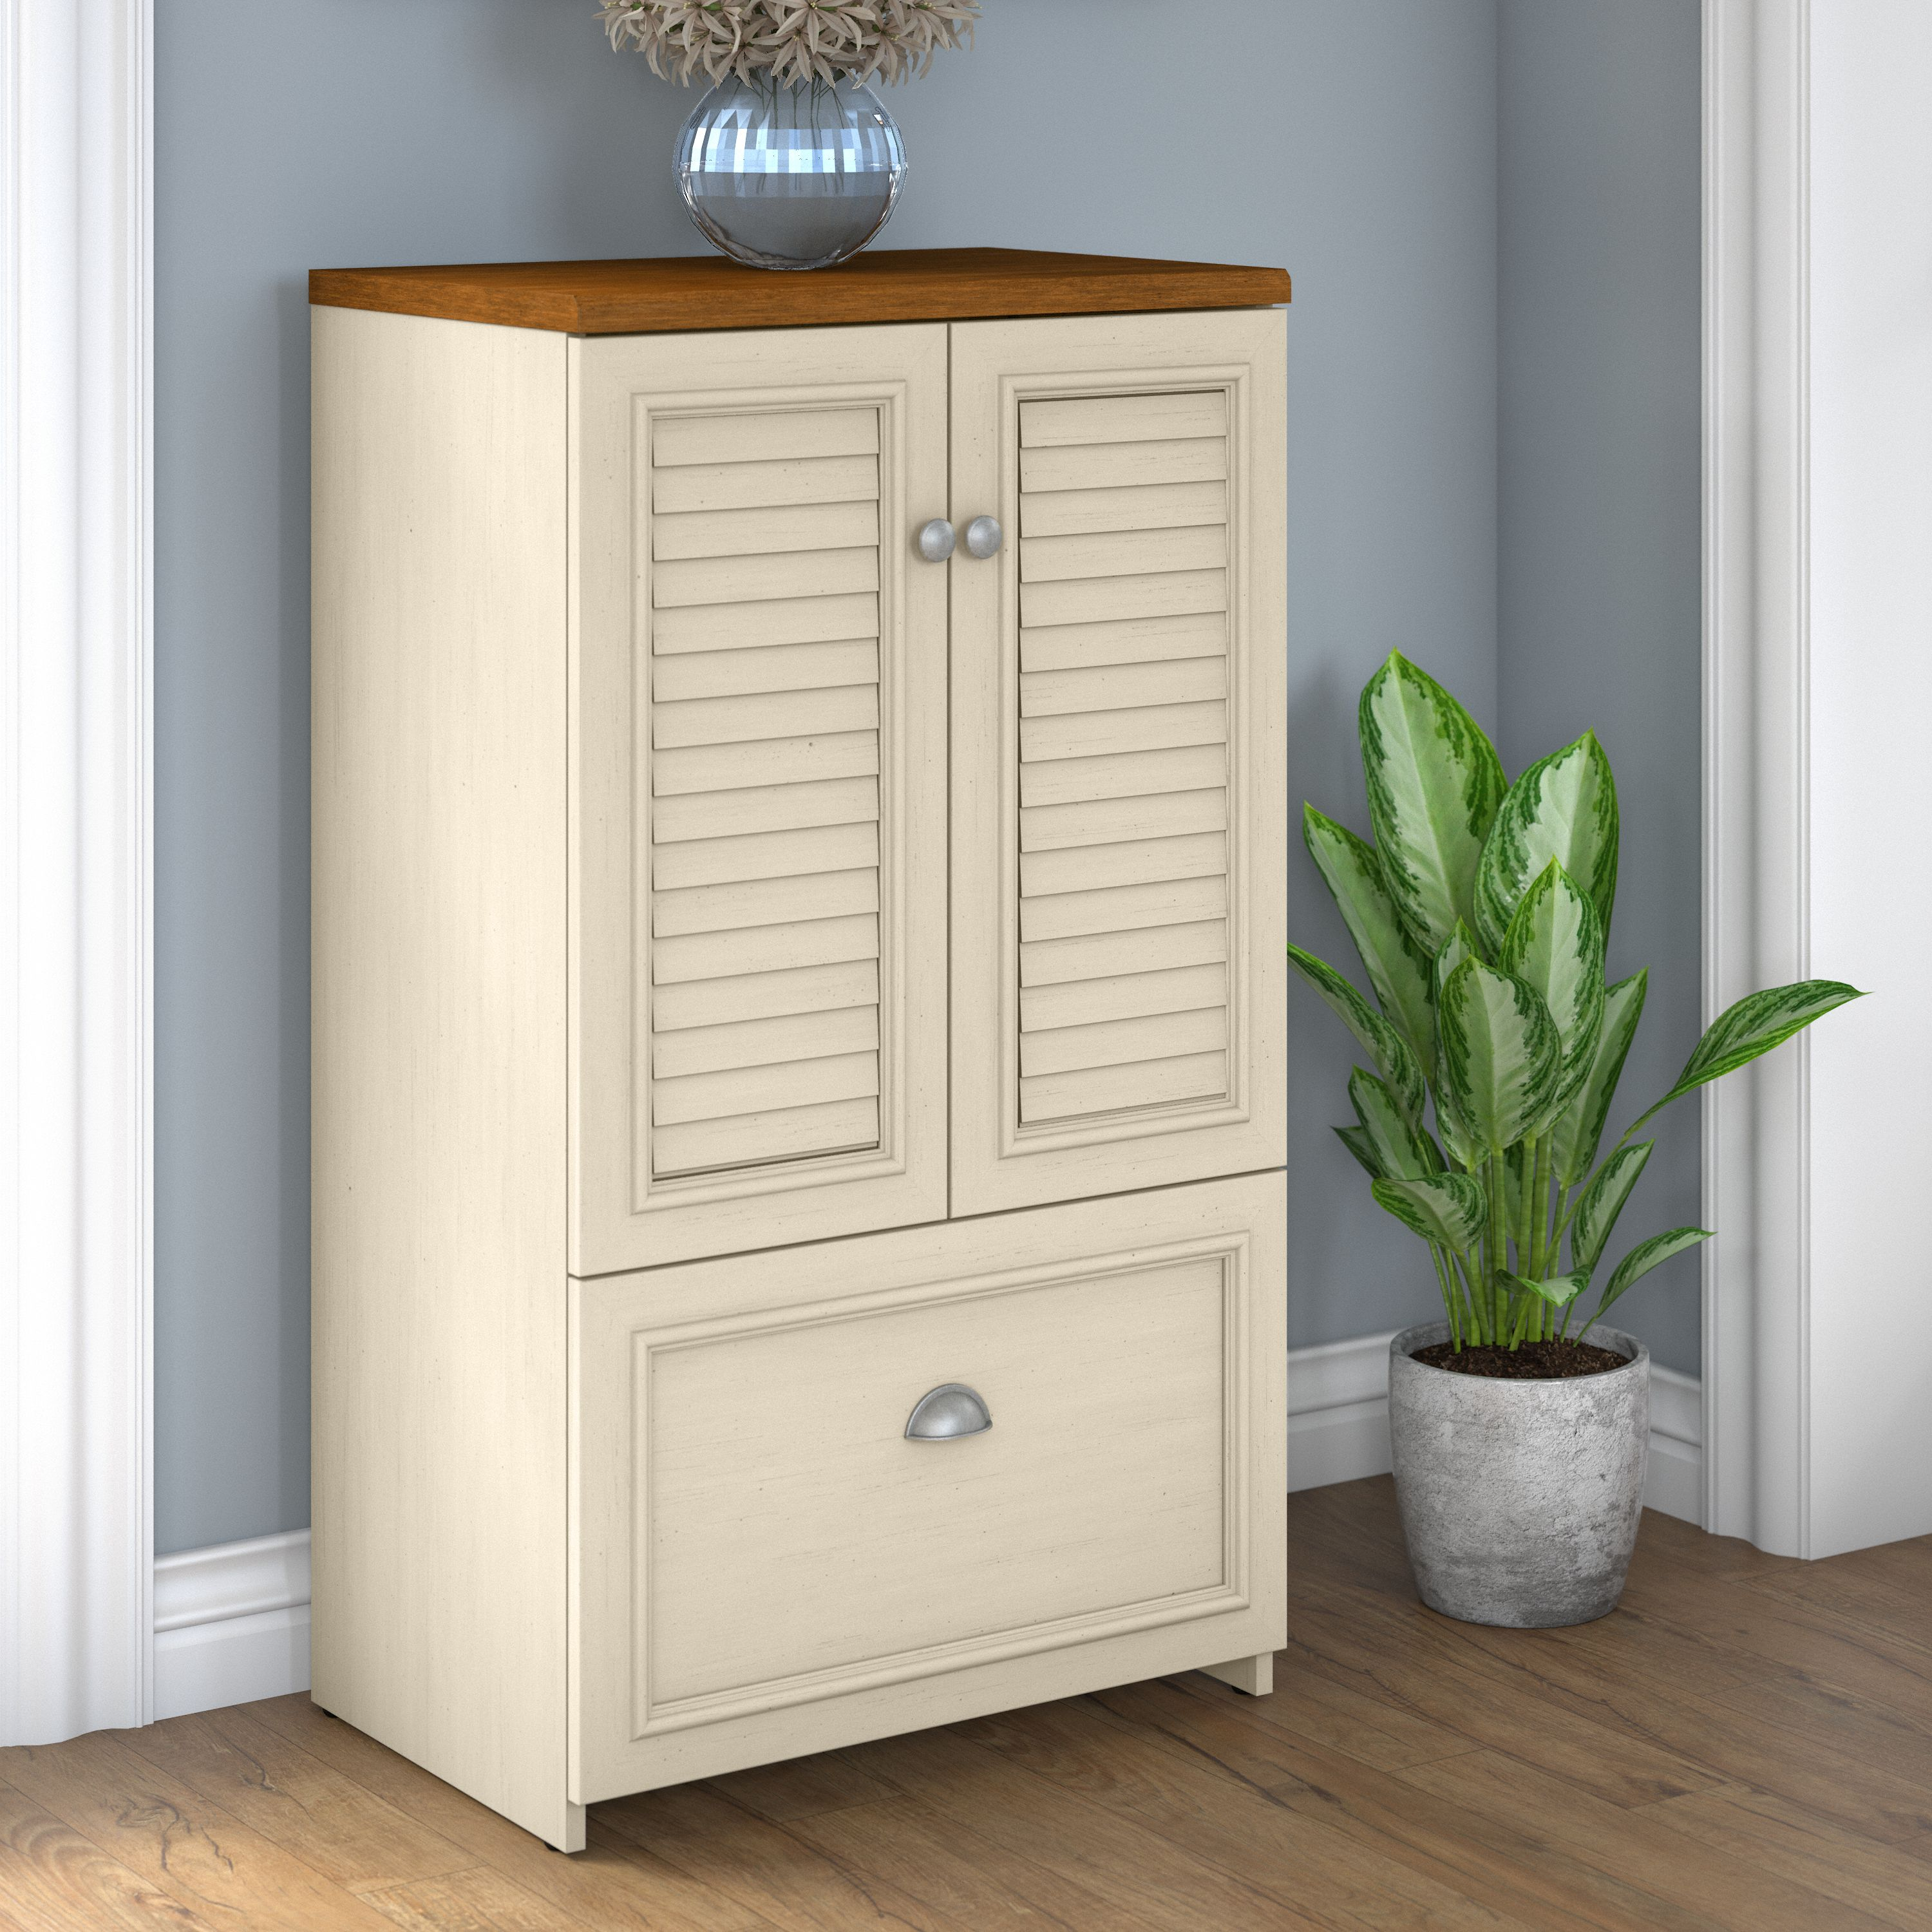 Shop Bush Furniture Fairview Shoe Storage Cabinet with Doors 01 FV020AW #color_antique white